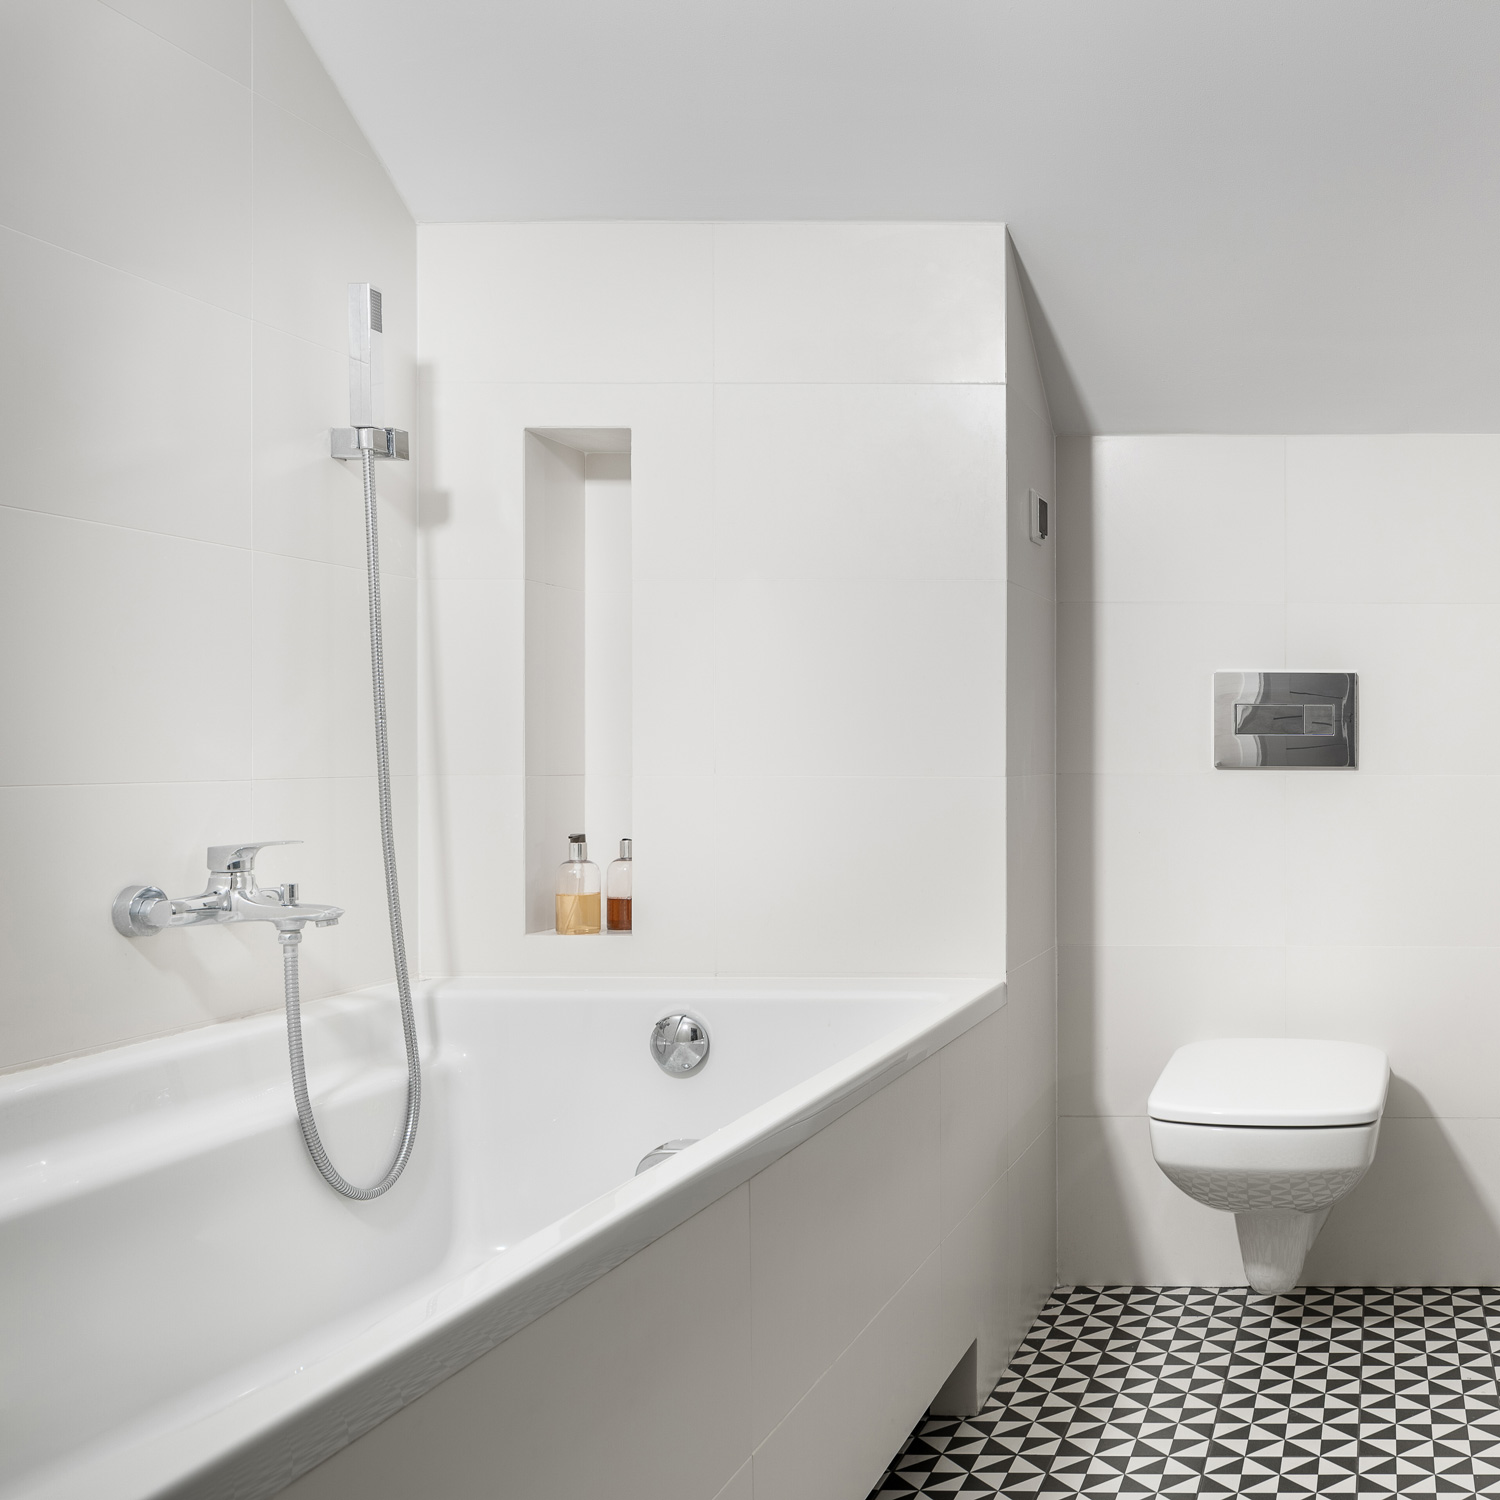 White bathroom with bathtub, toilet and black and white mosaic floor tiles